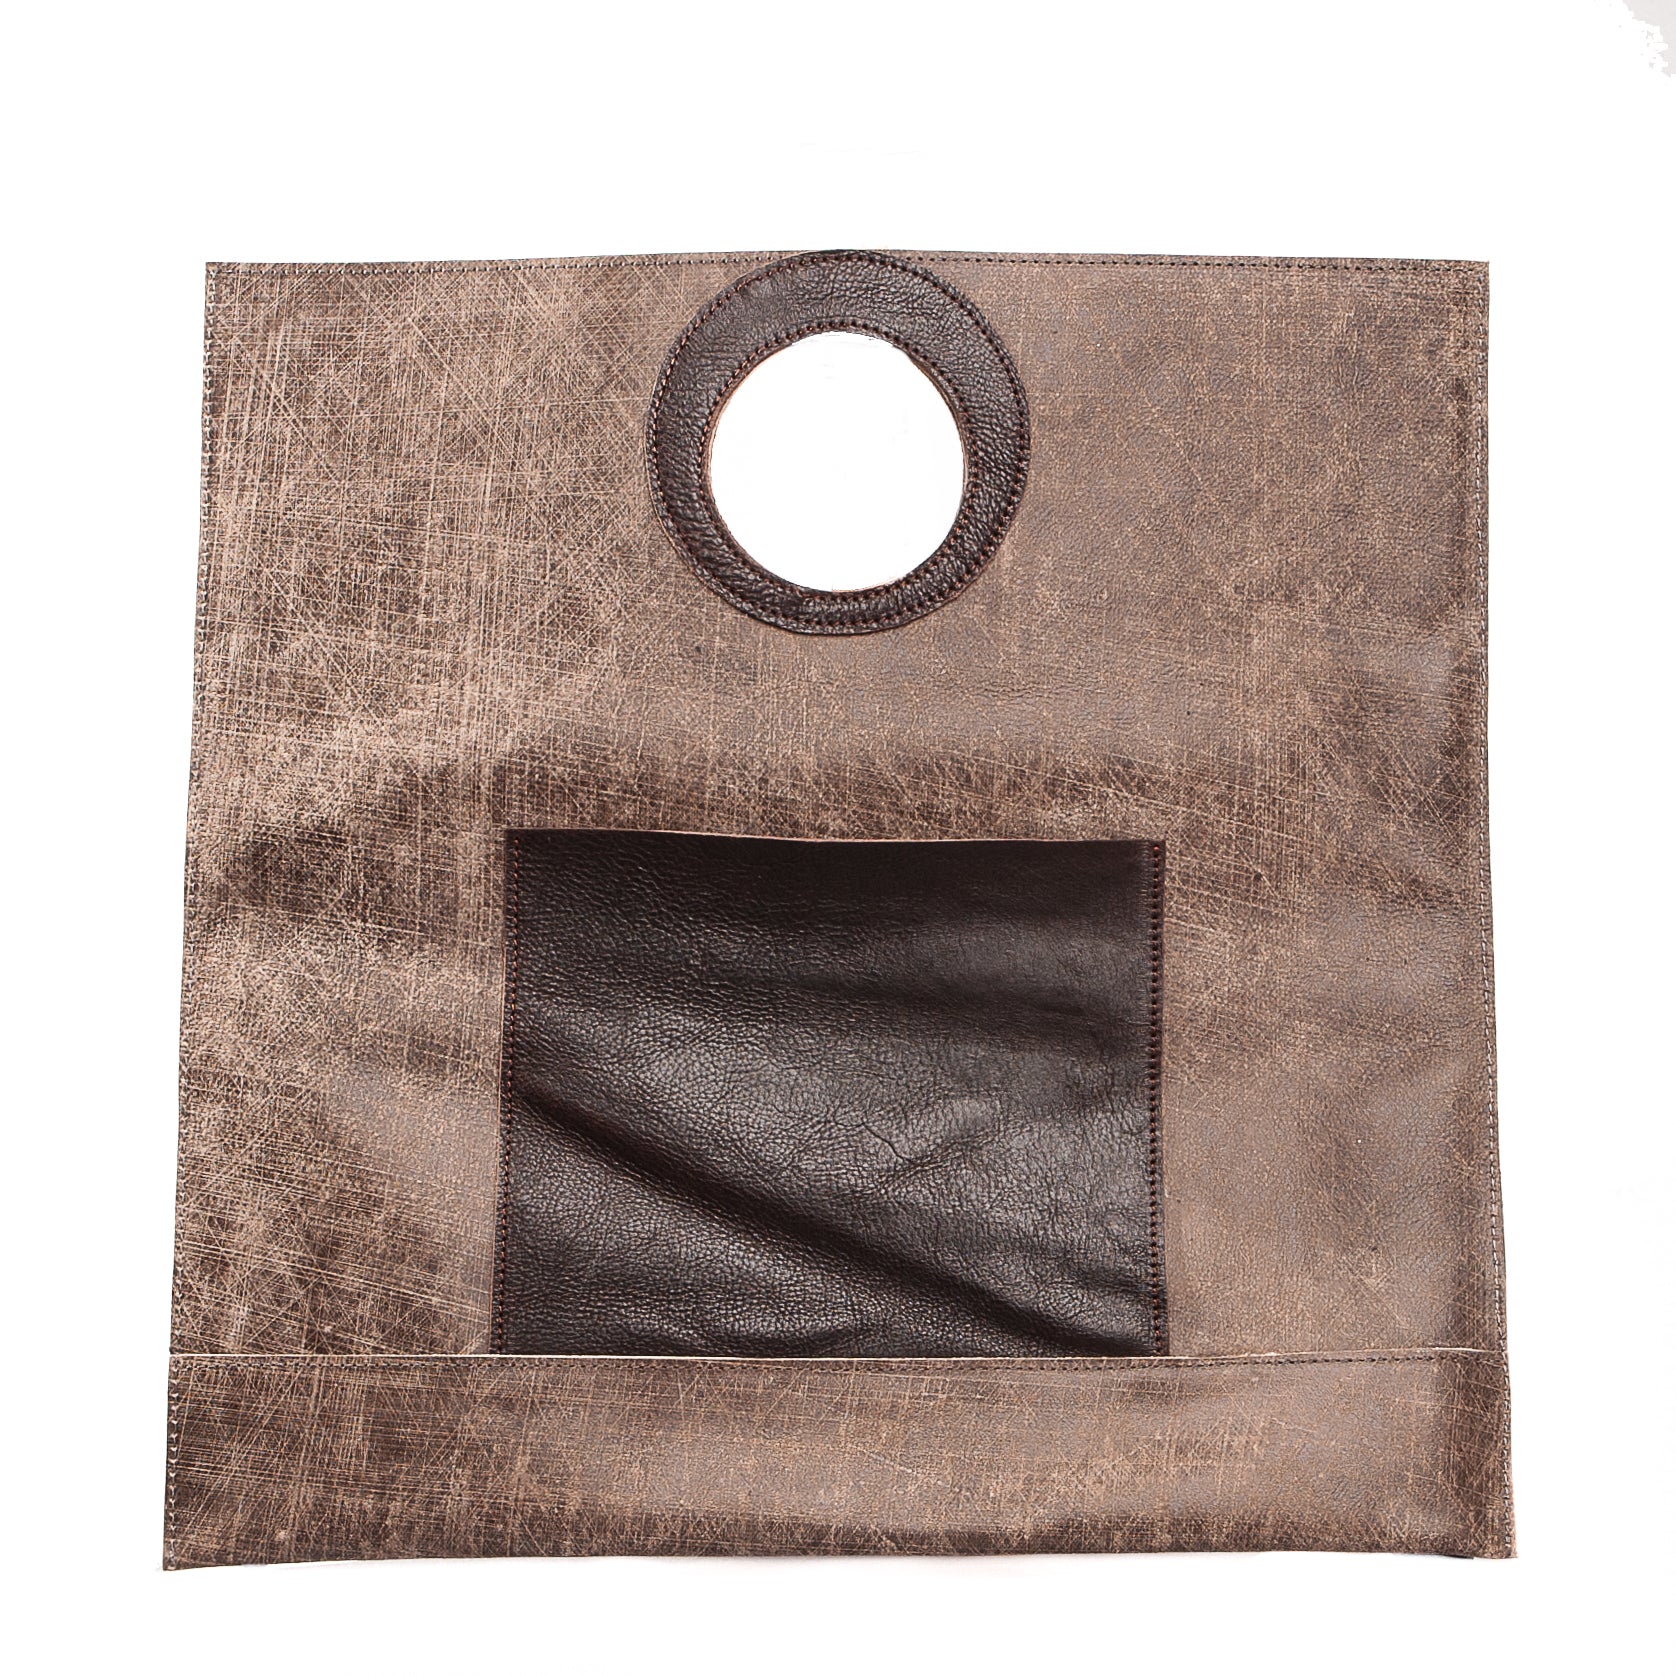 Gifti Fold Over Leather Clutch/Handbag with Top Handle (Grey & Chocolate)